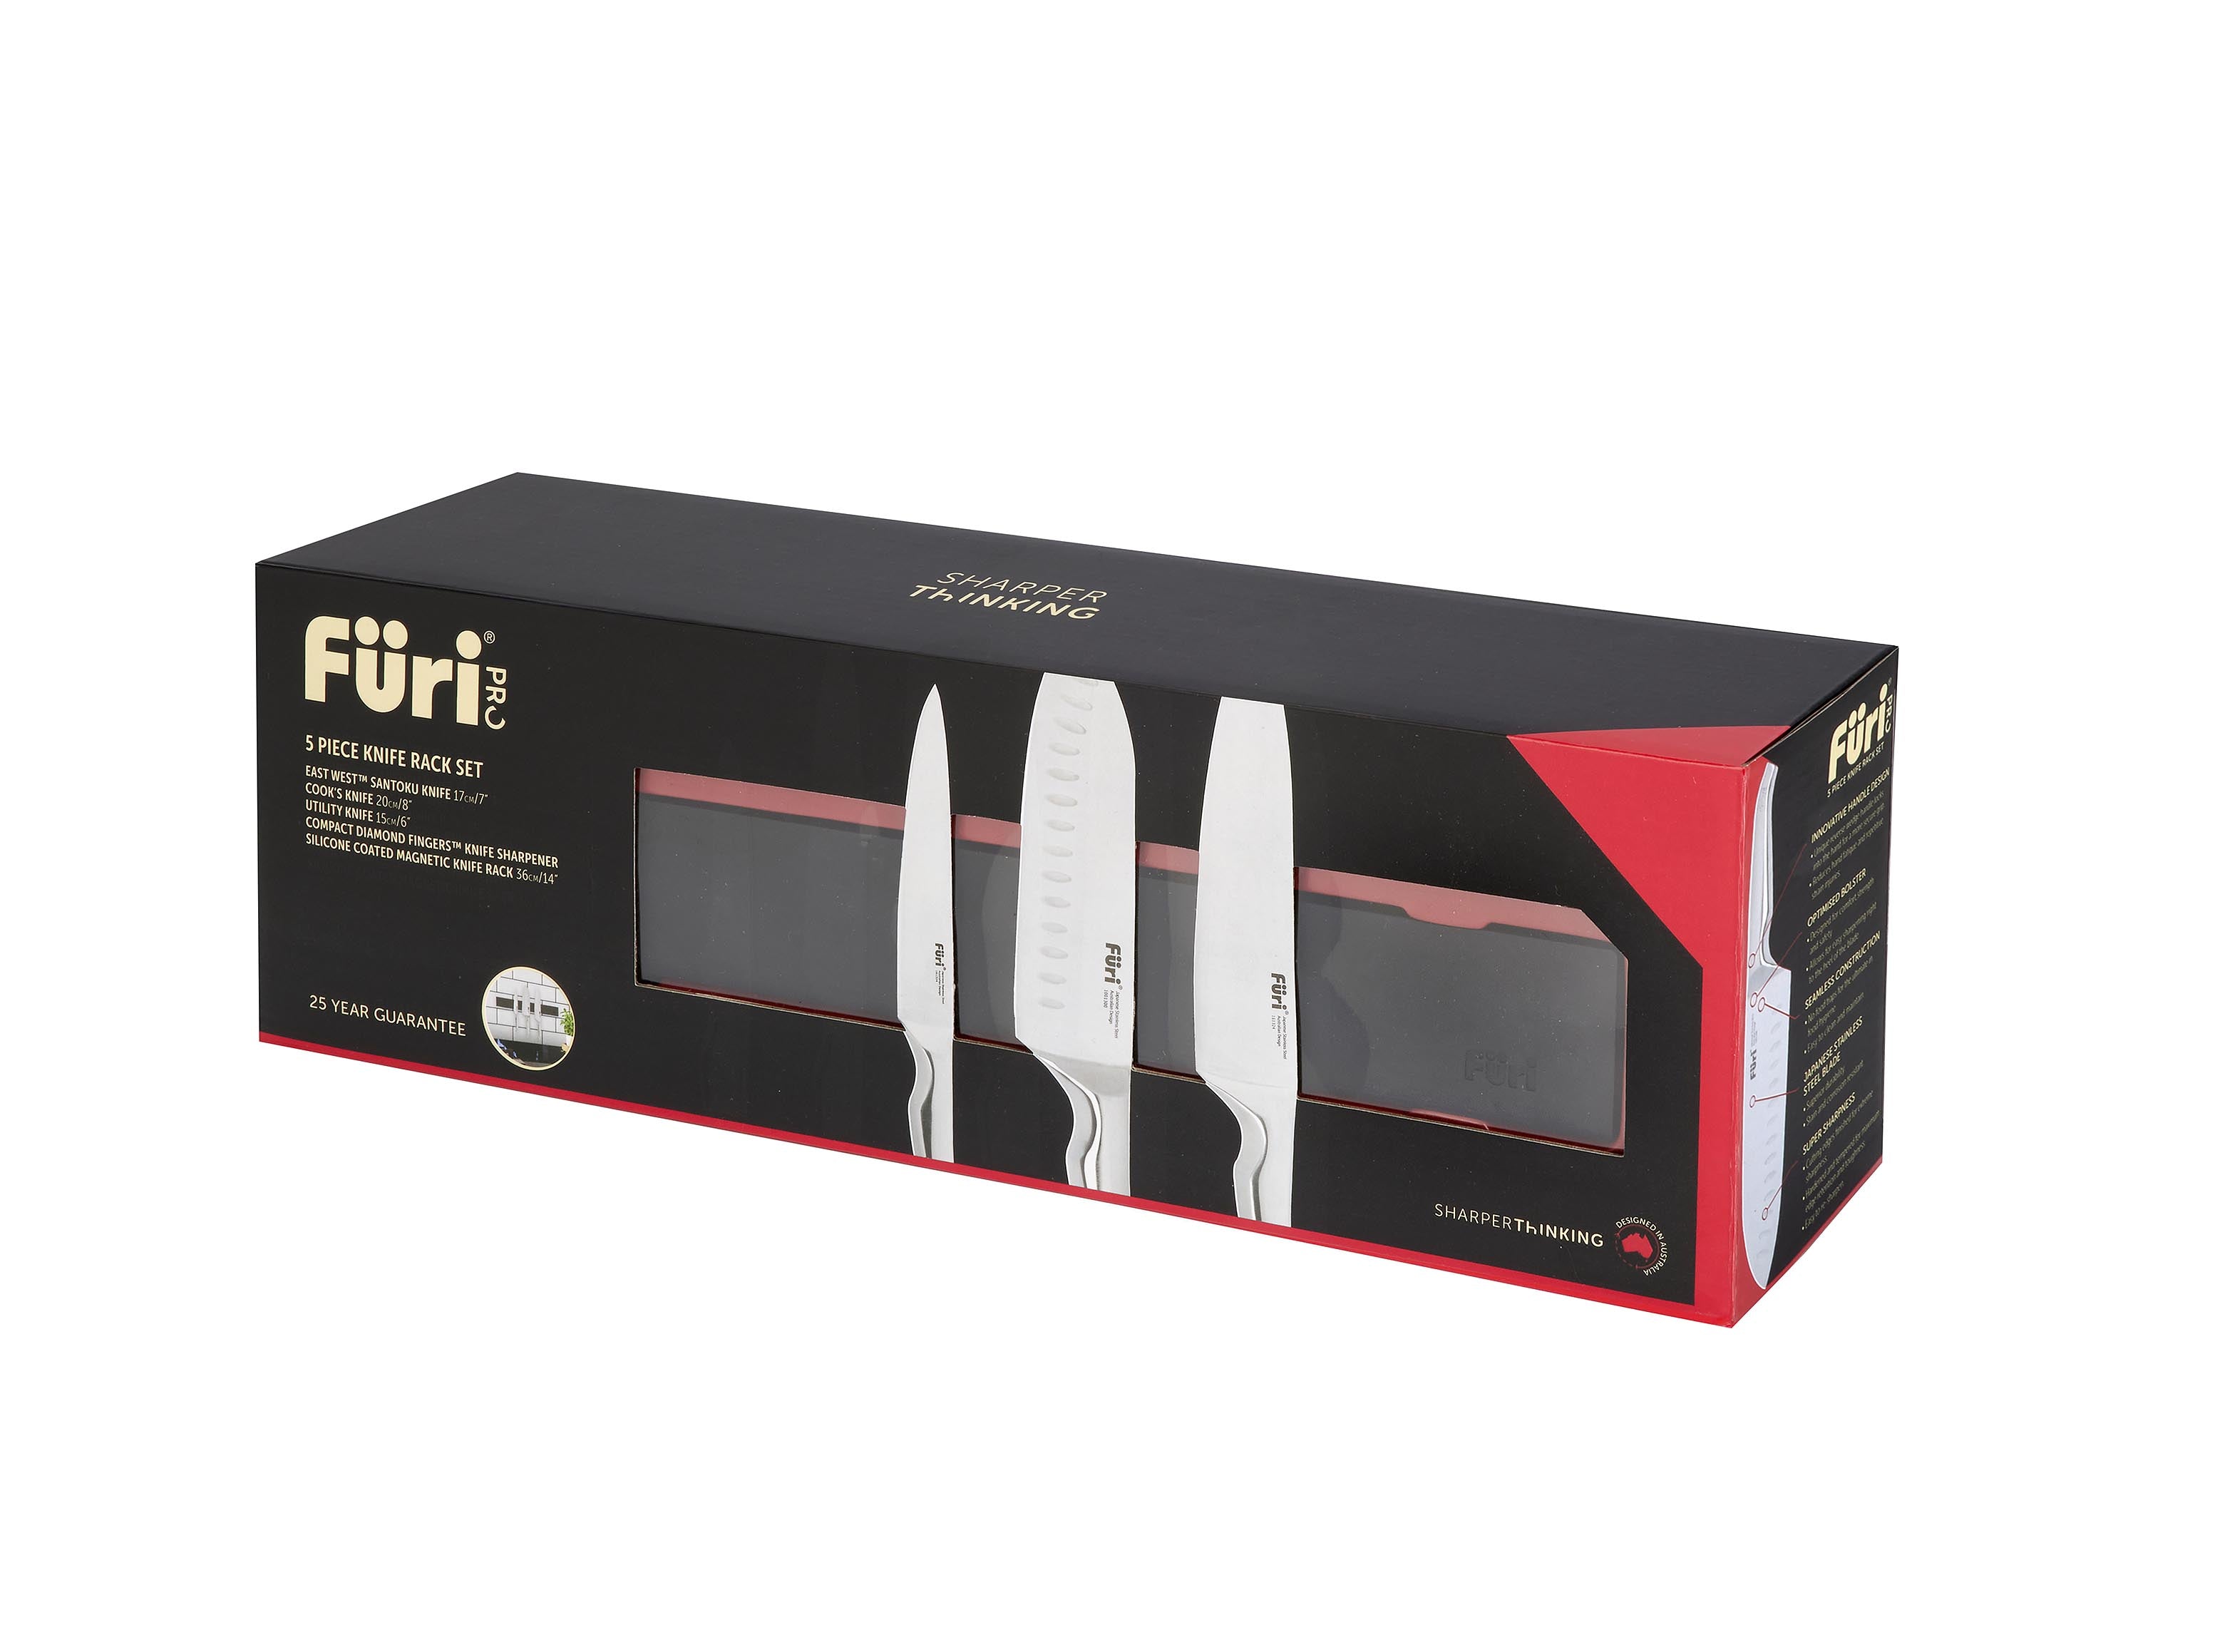 Furi Pro 5 Piece Knife Wall Rack Set - Includes Compact Diamond Fingers Sharpener